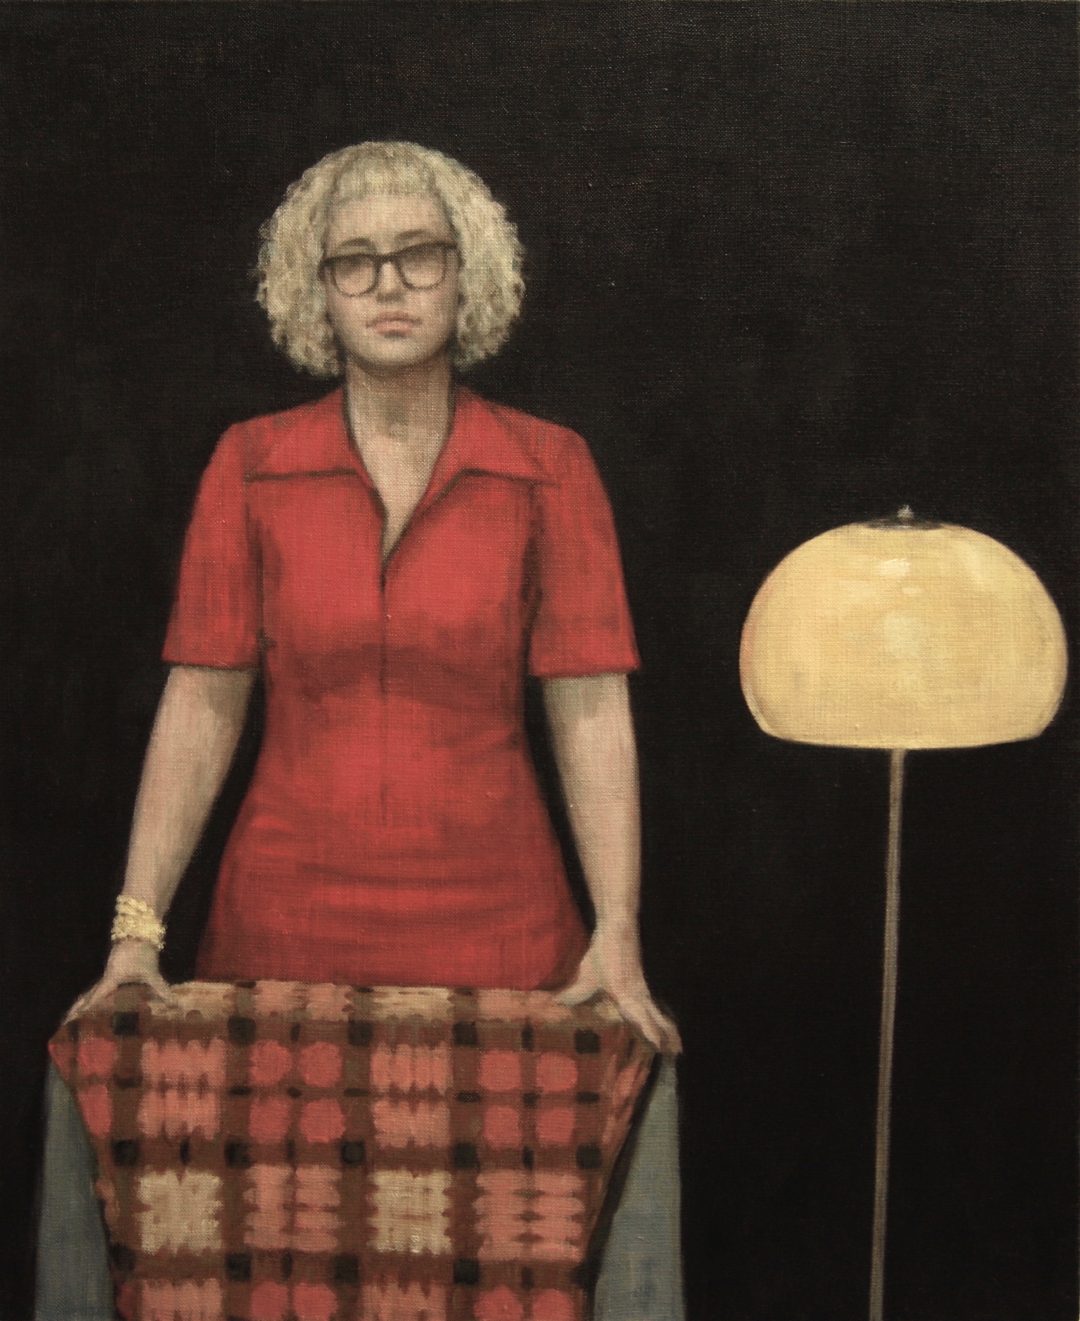 'Lisa Heledd Jones' Carl Chapple Oil on canvas, 45cm x 50cm, 2016